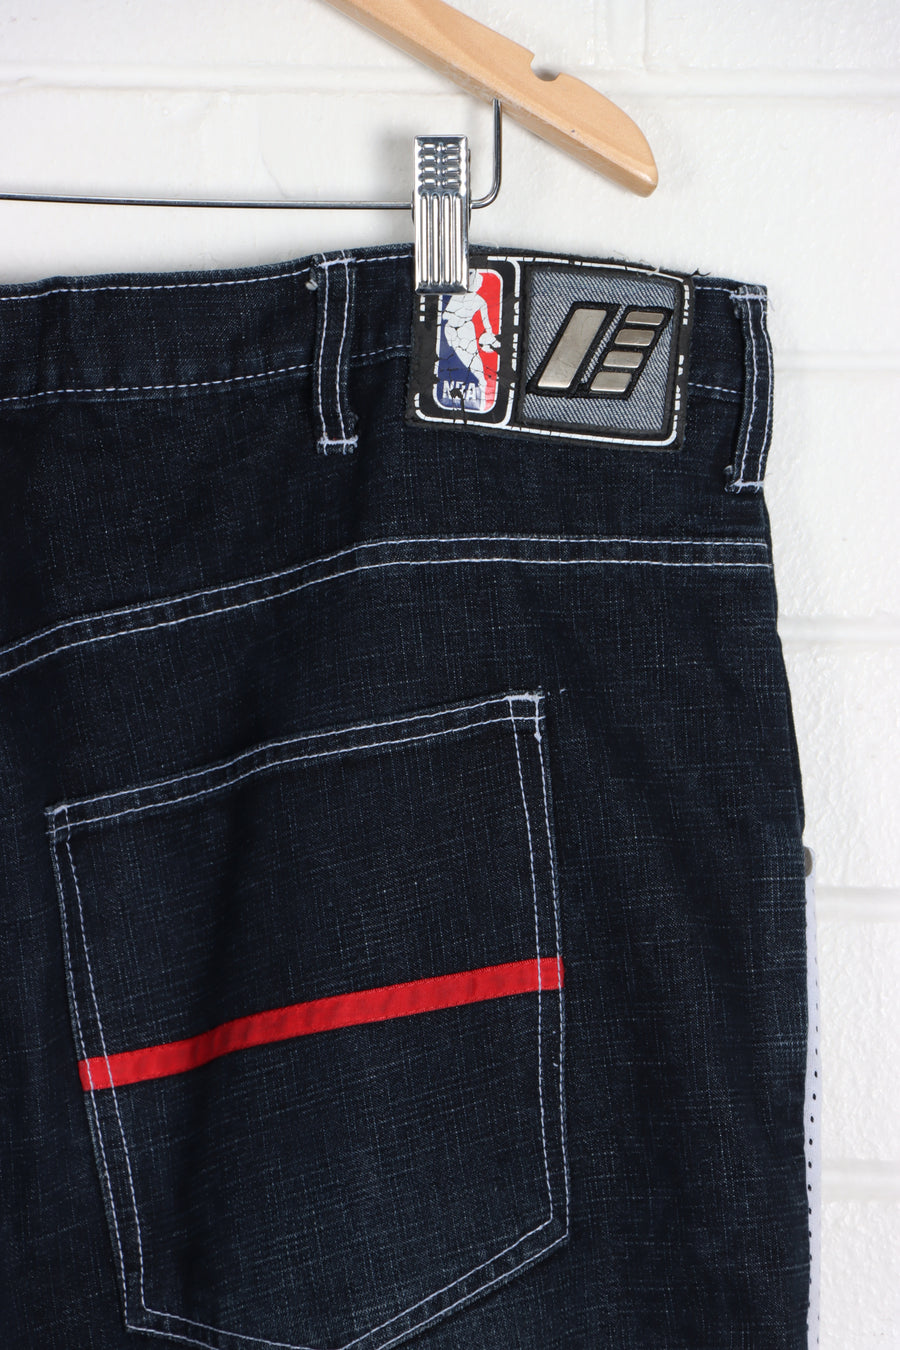 NBA UNK Miami Heat Embroidered Jeans (40) - Vintage Sole Melbourne